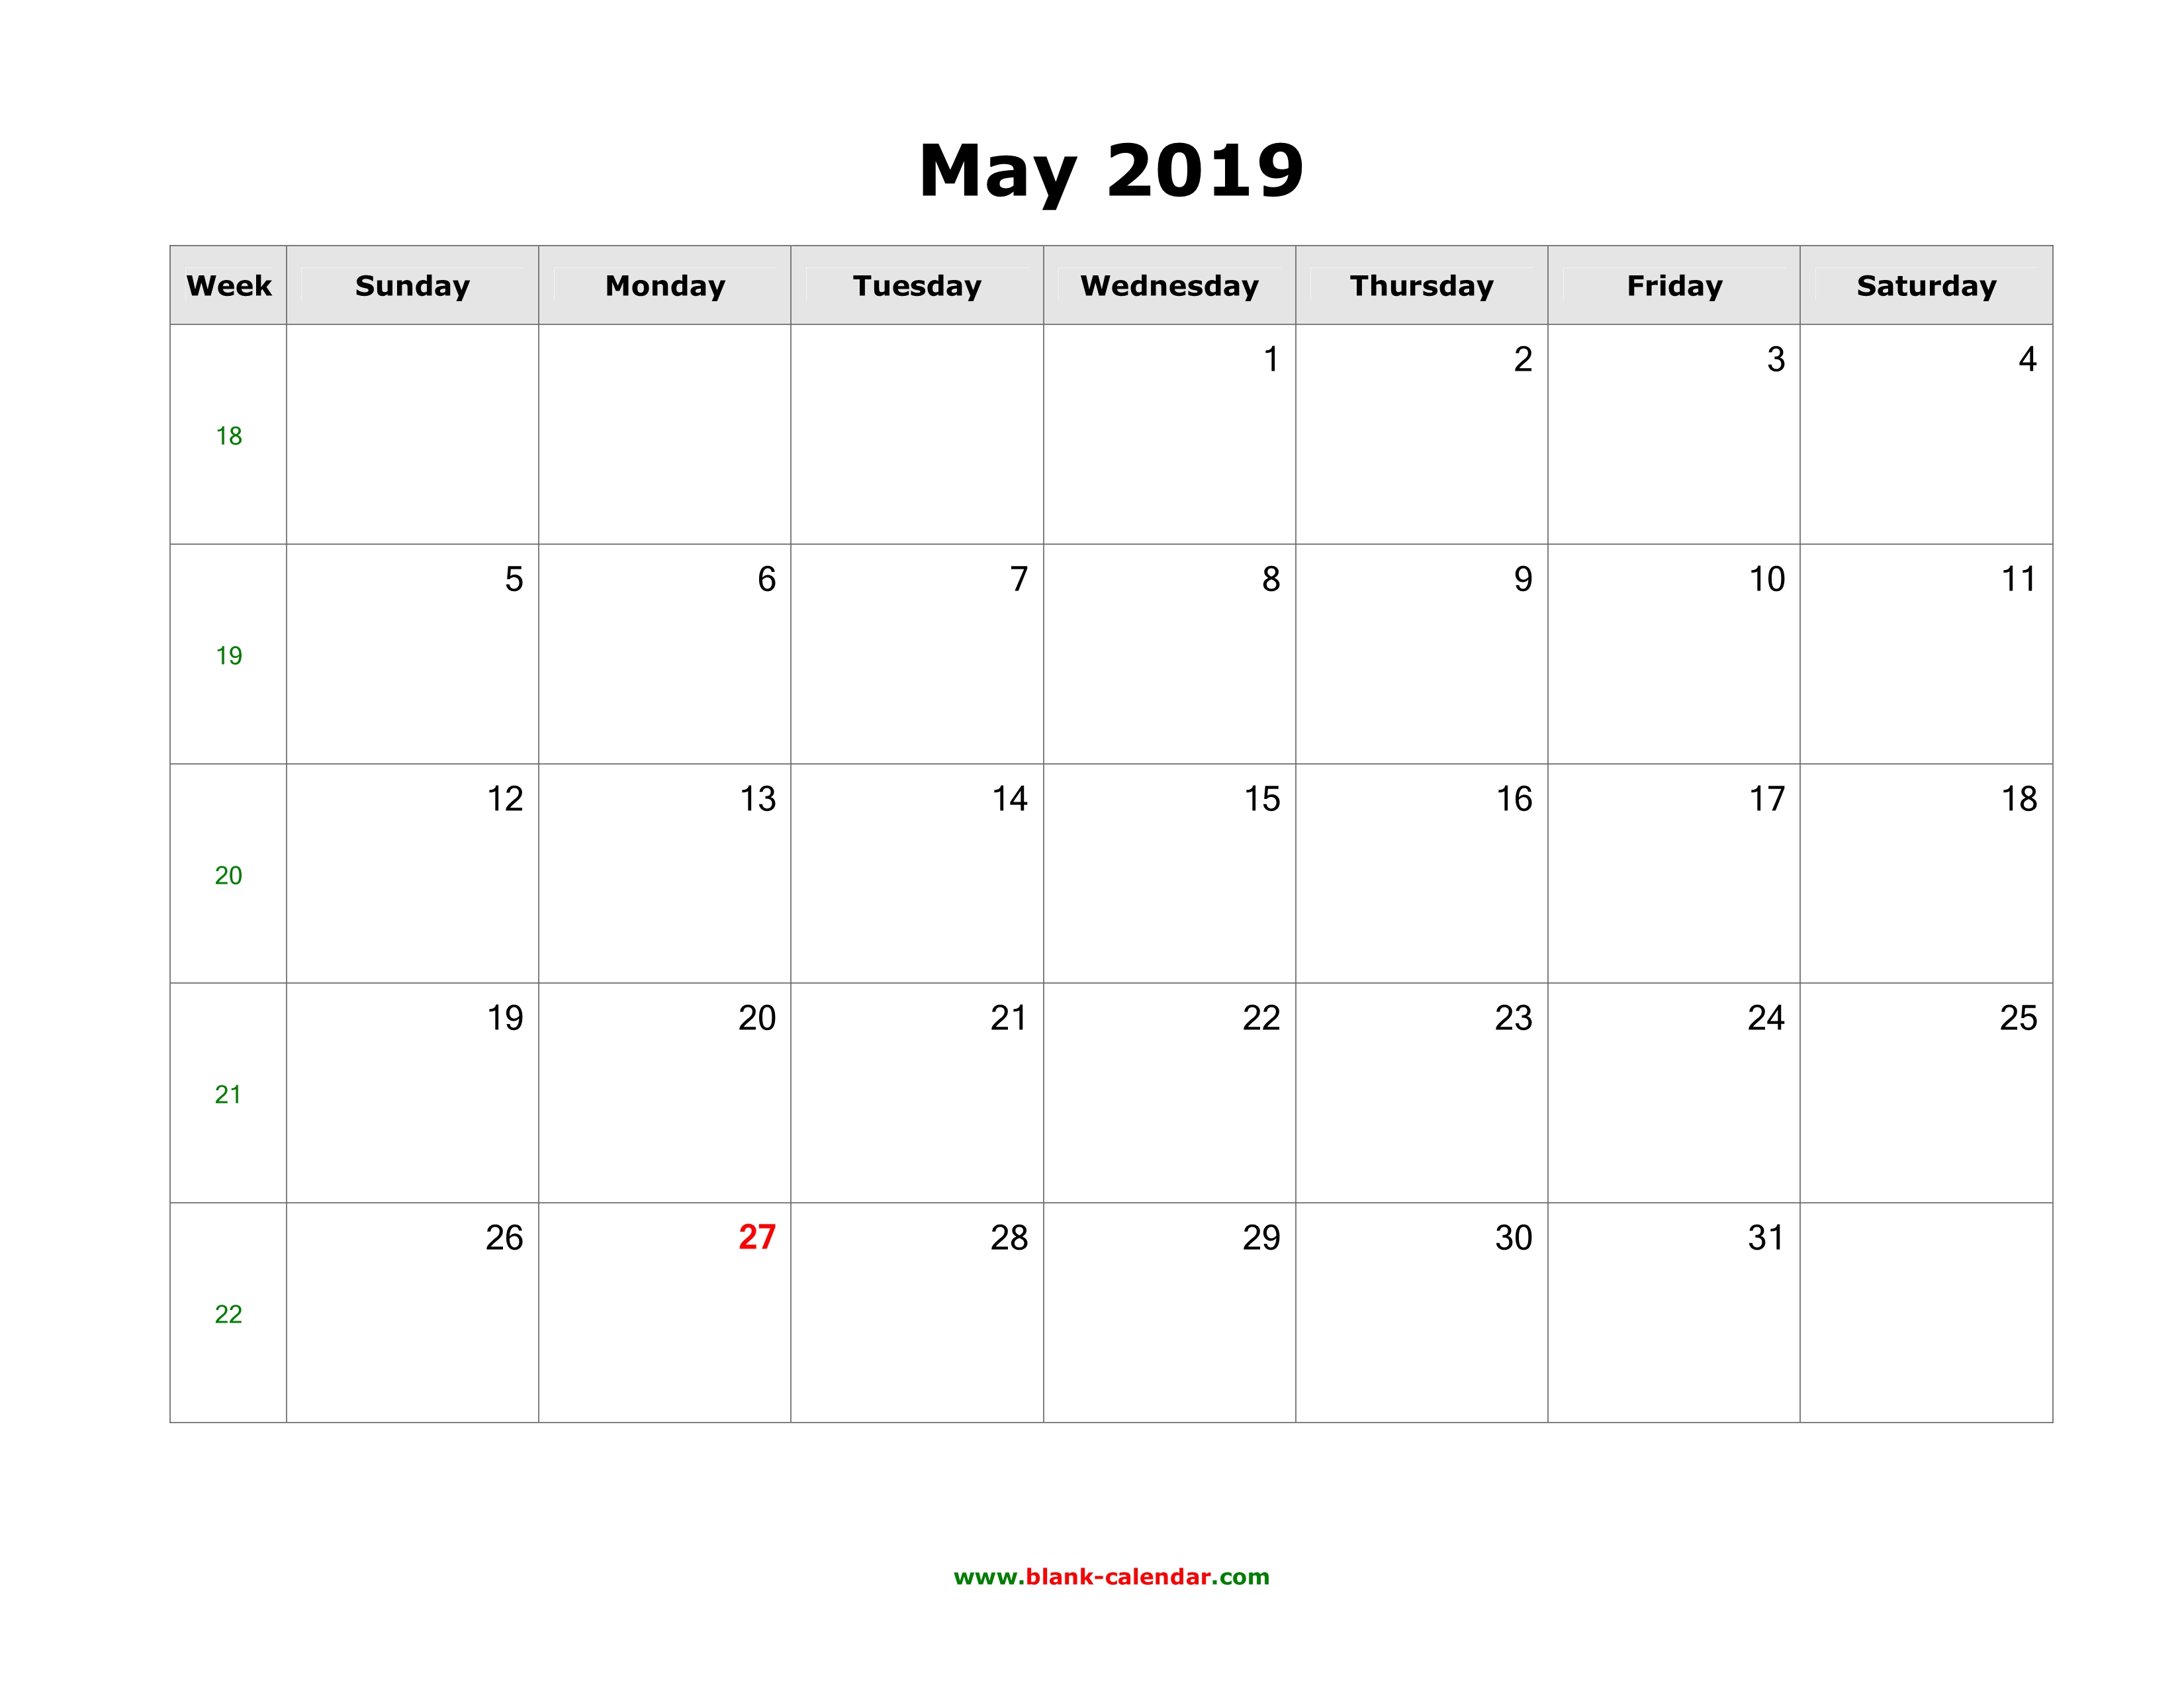 Download May 2019 Blank Calendar (horizontal)